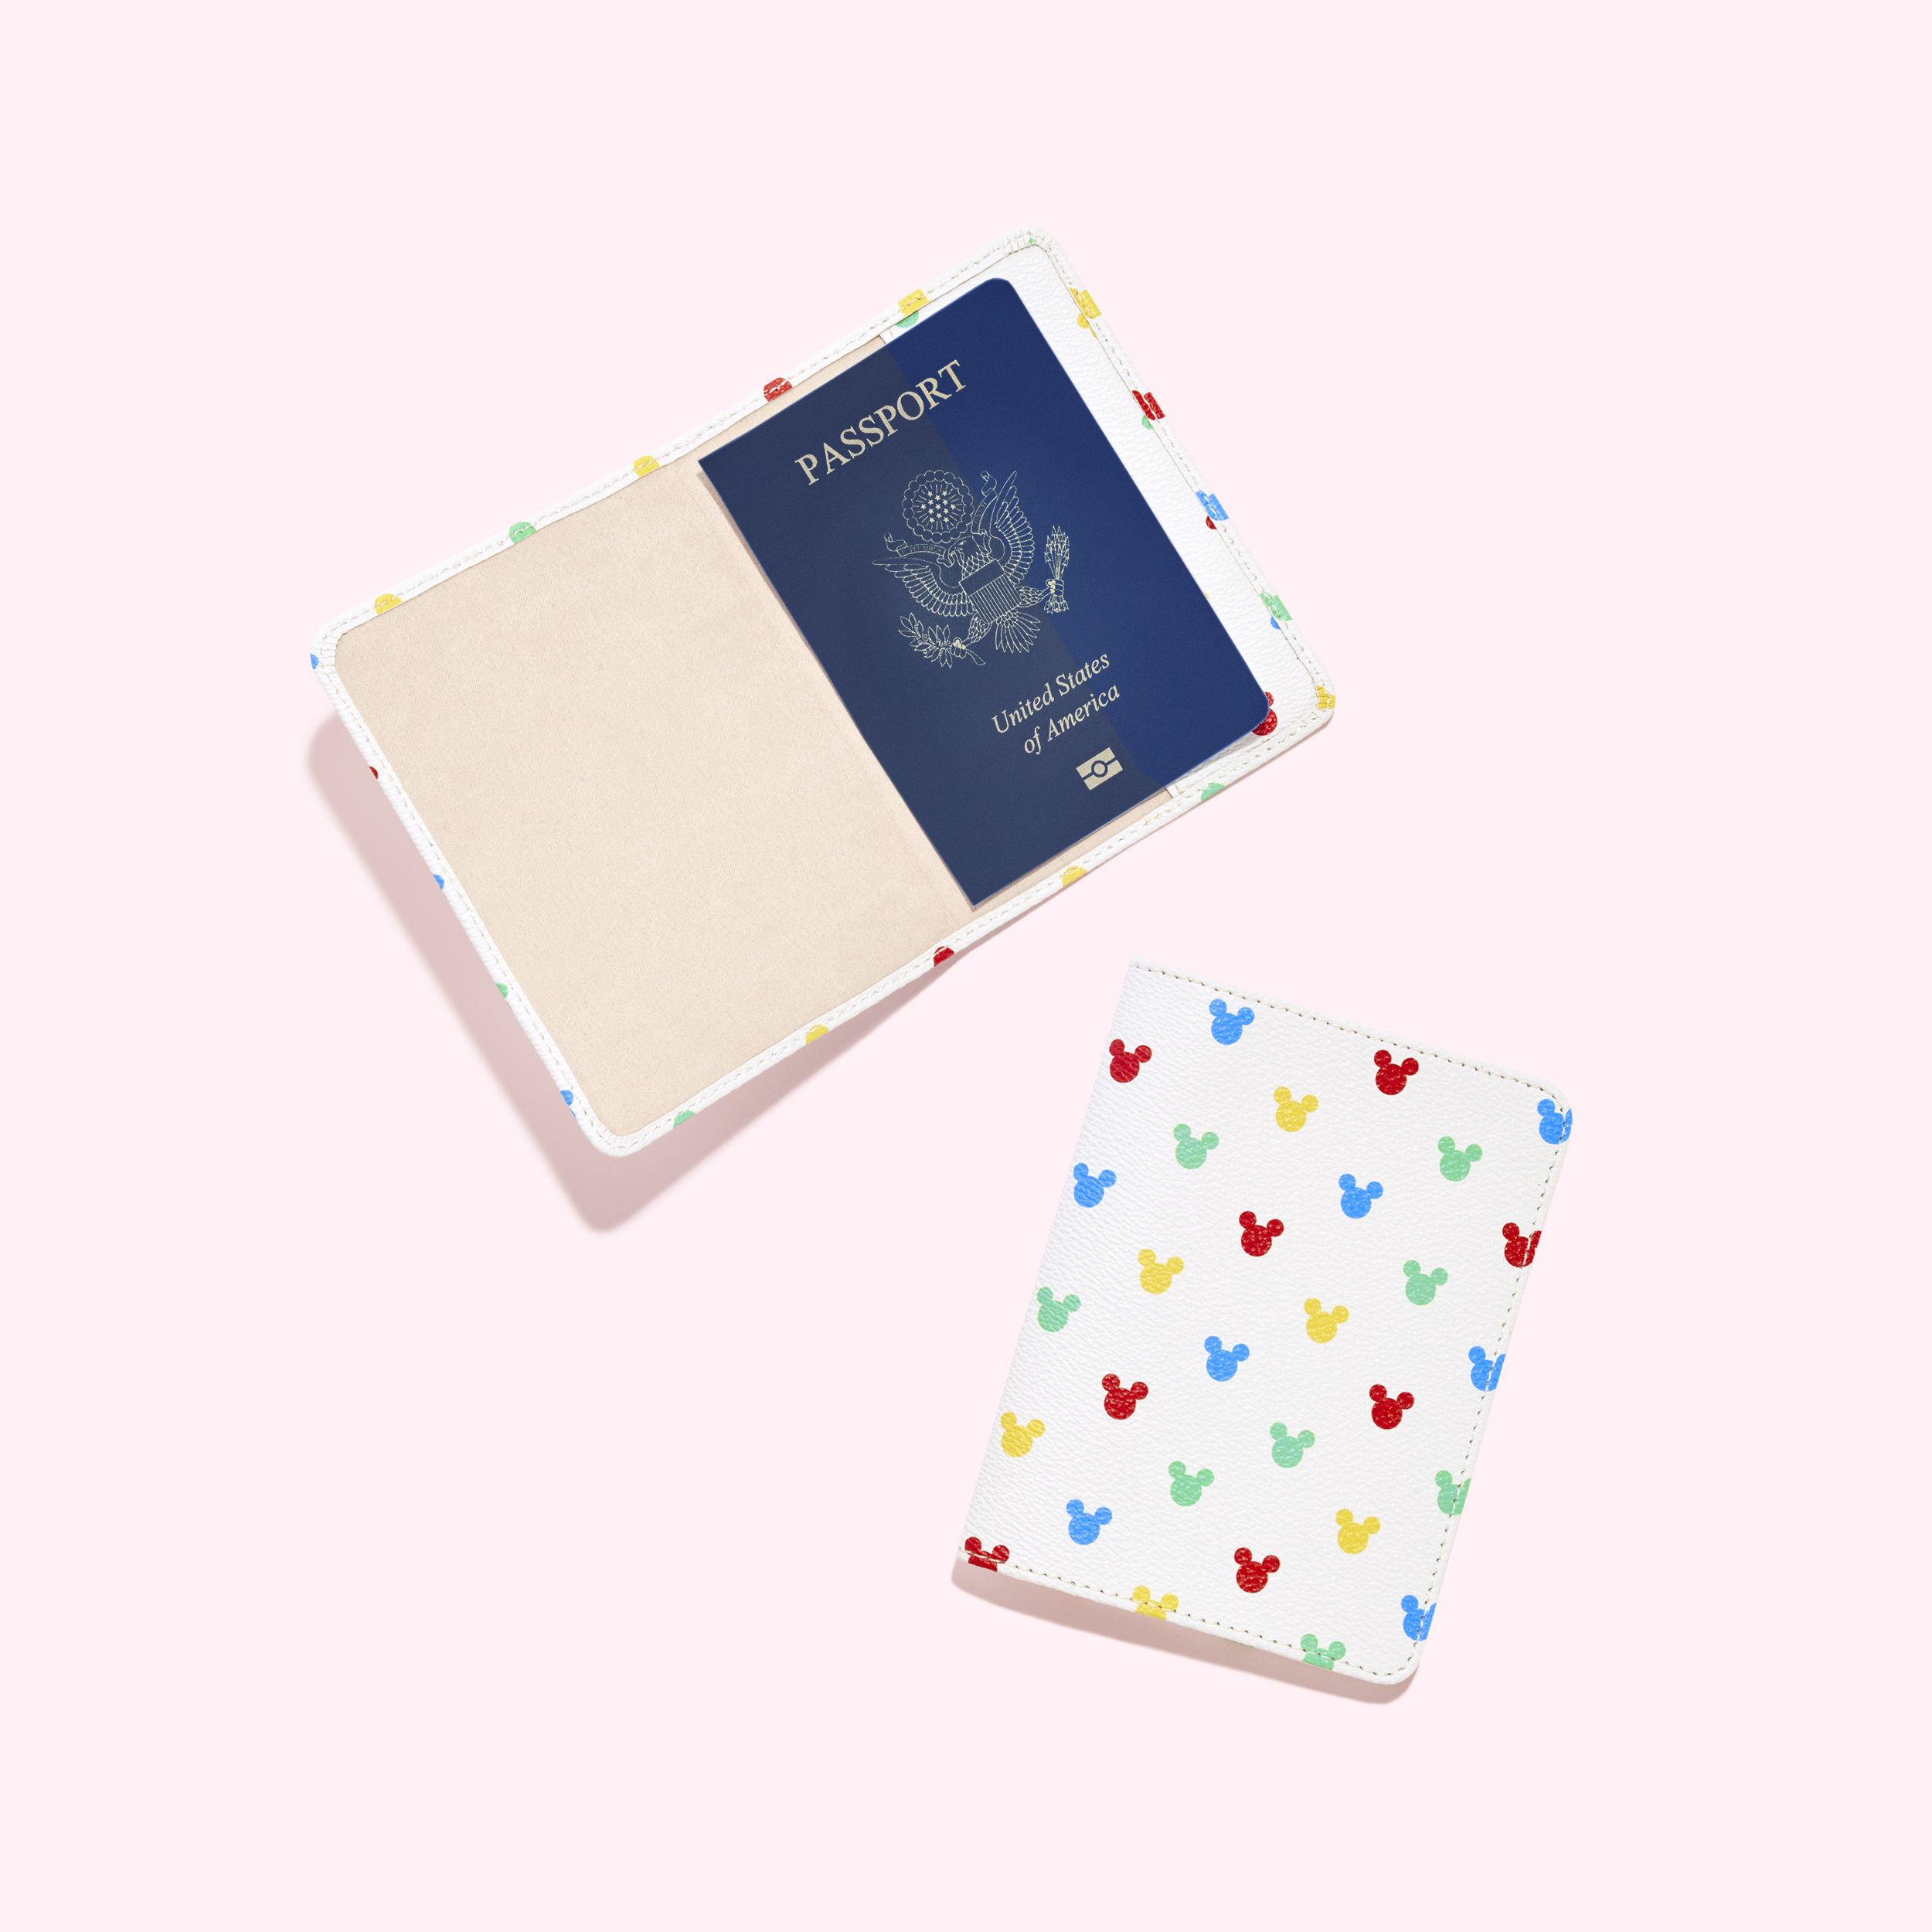 cute passport cover